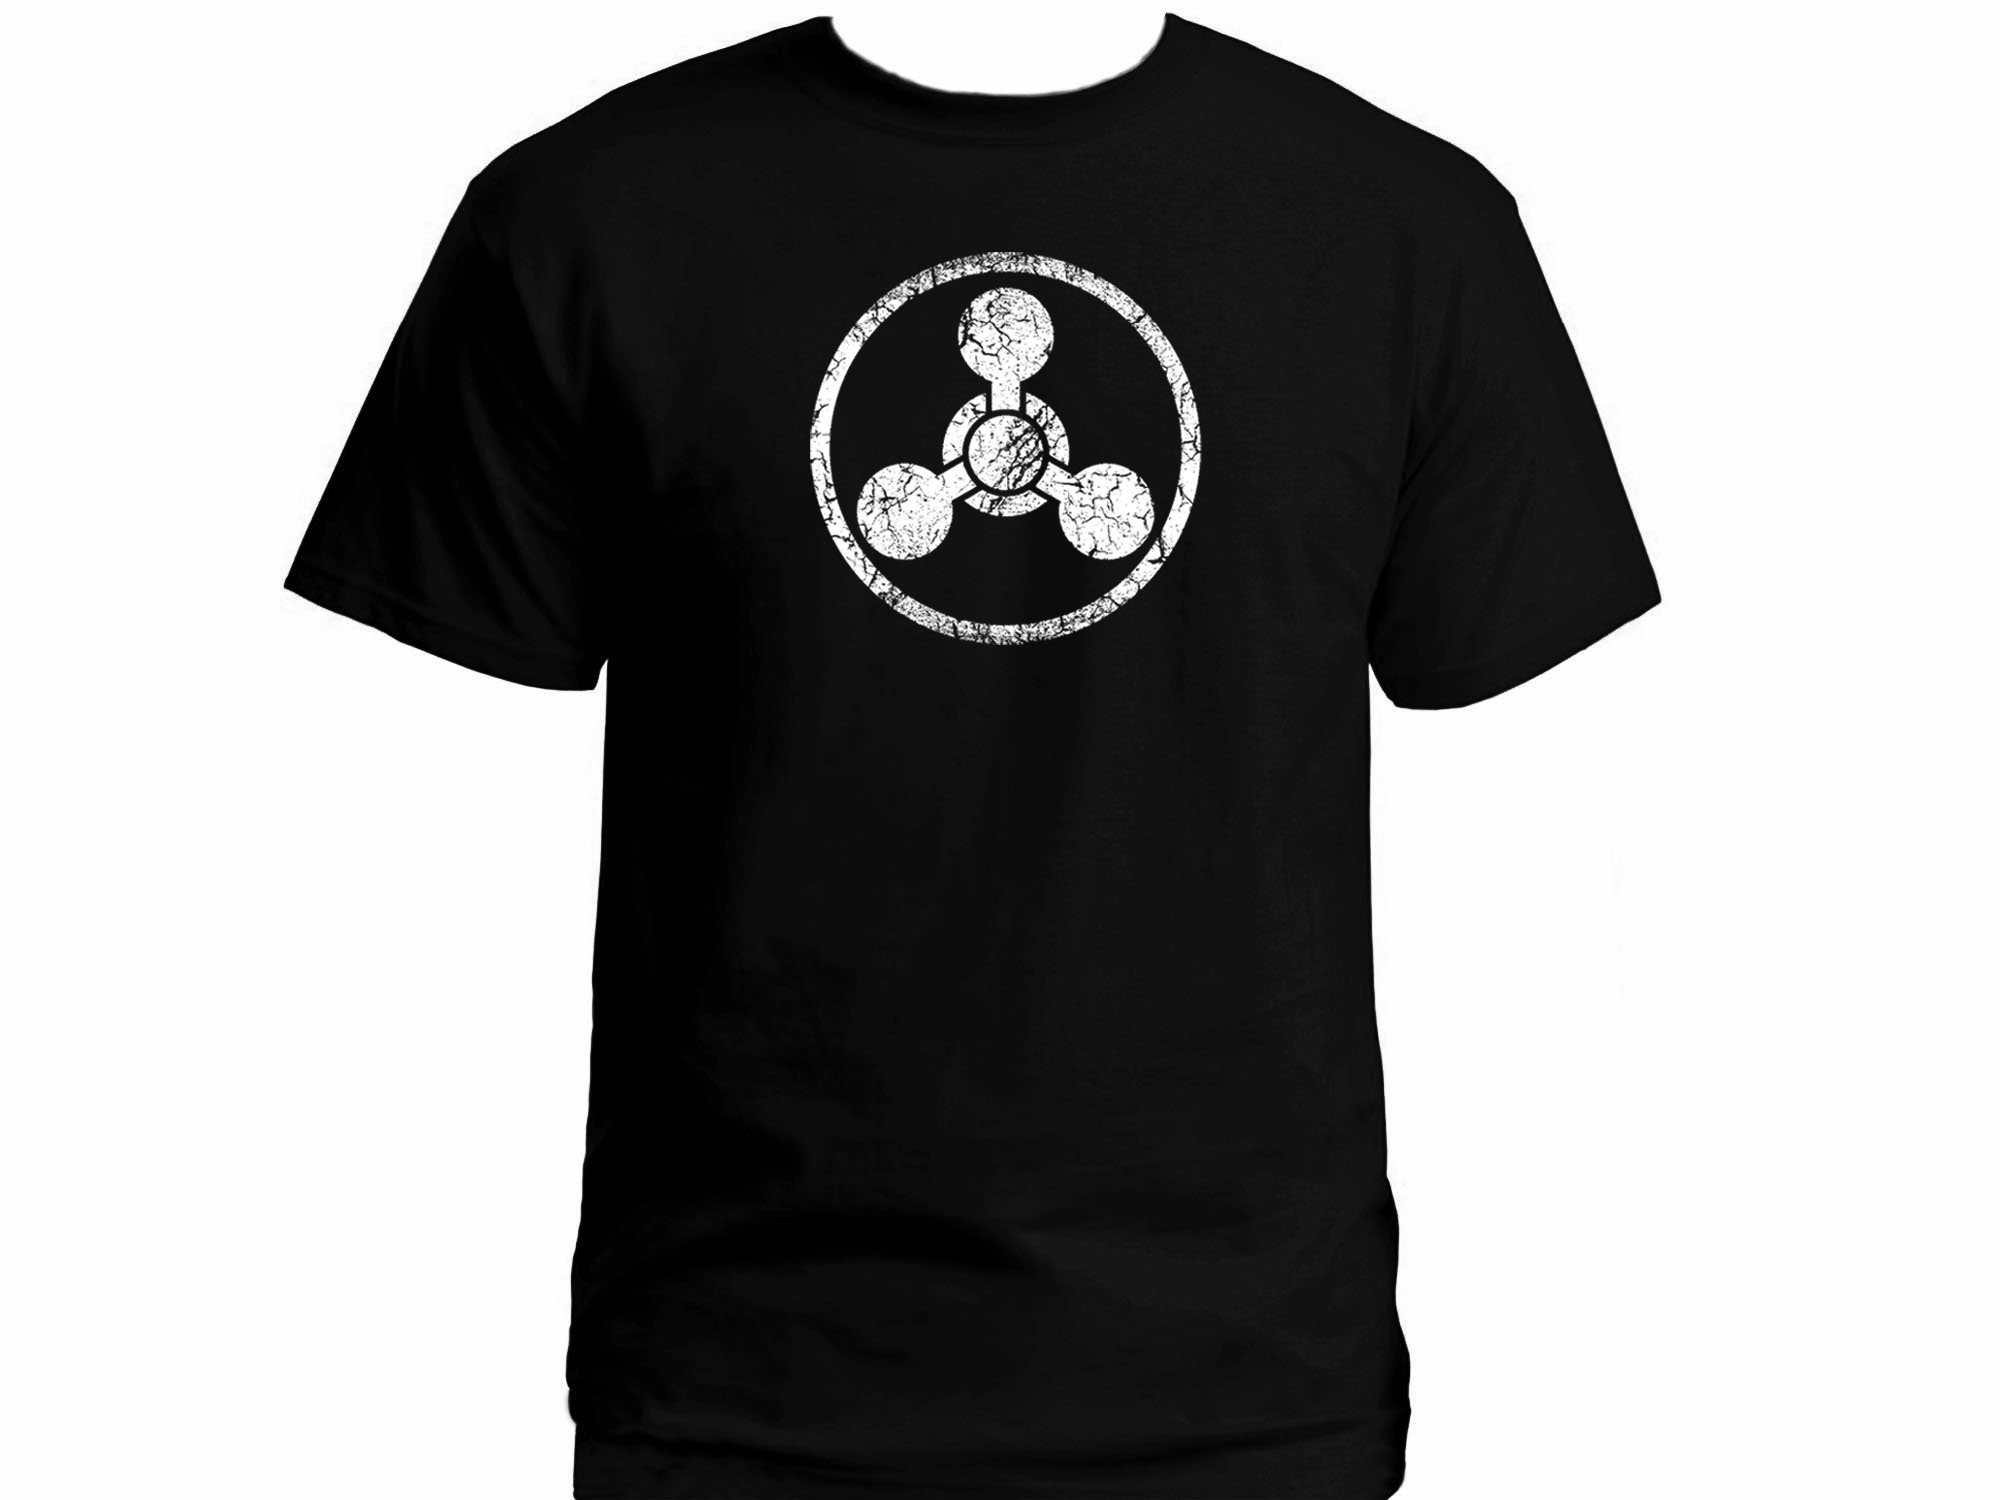 Chemical mass destruction weapon logo t shirt